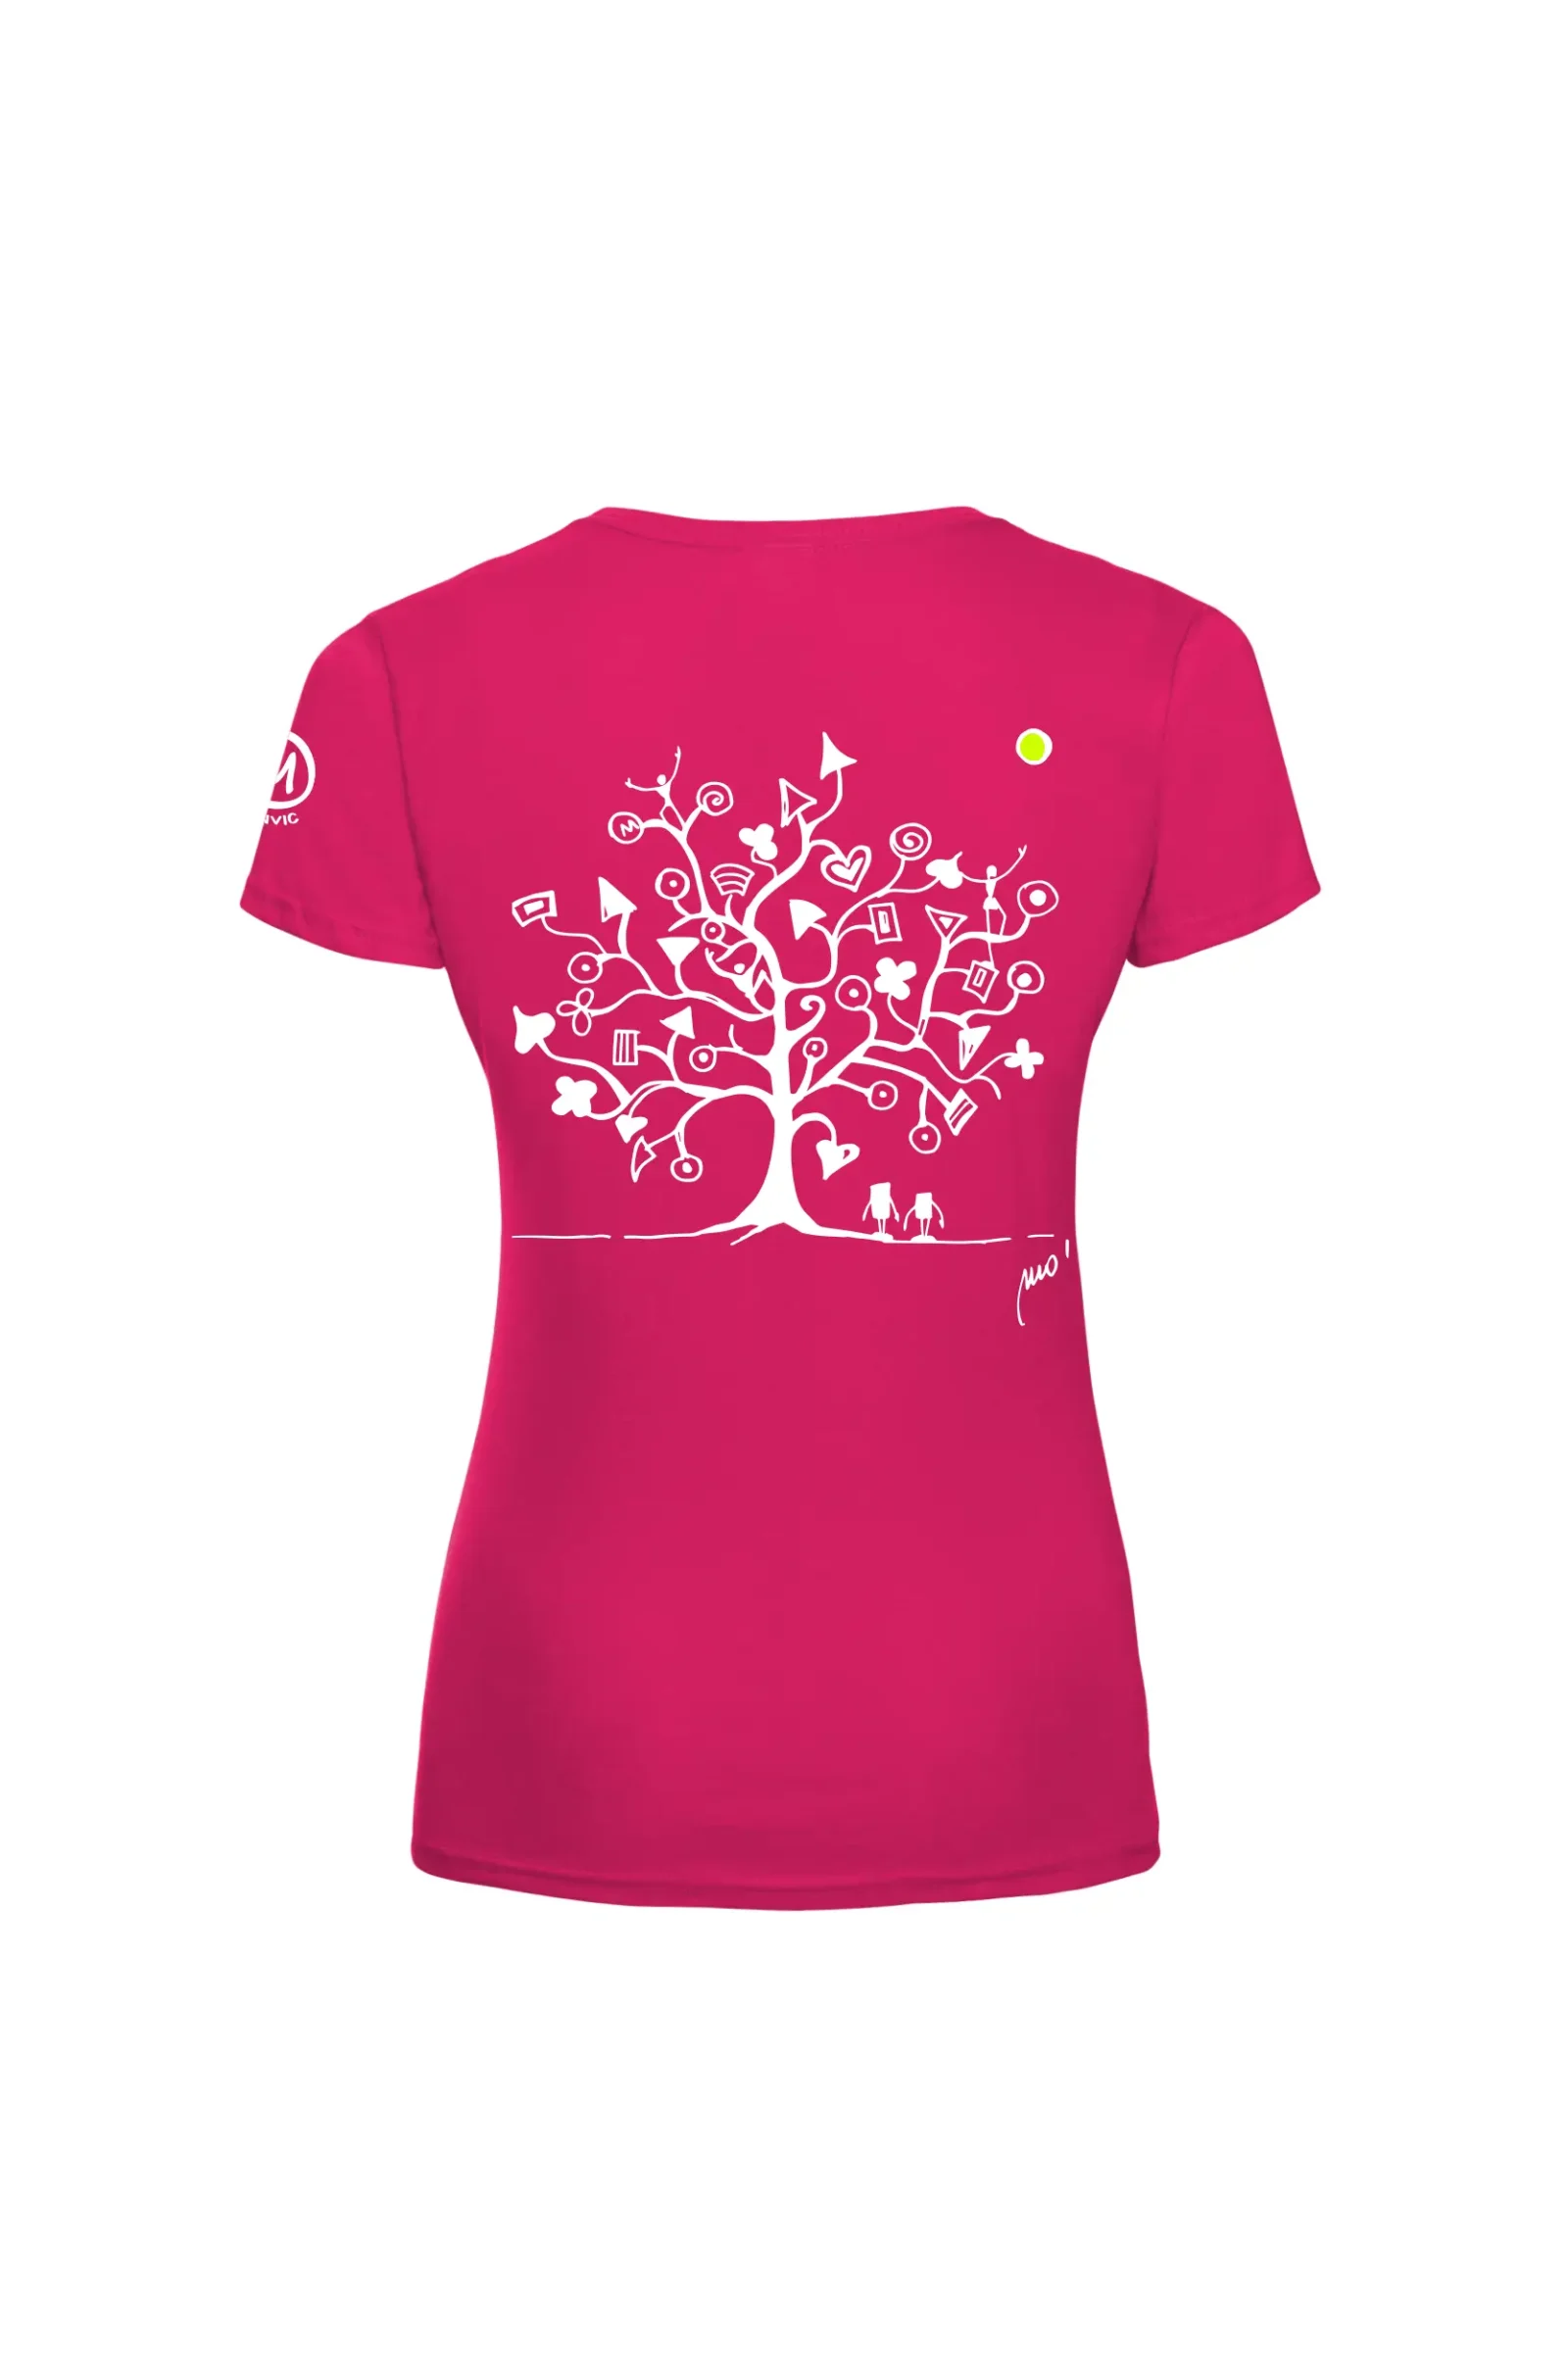 Women's climbing t-shirt - fuchsia cotton - "Magic Tree" graphic -SHARON MONVIC